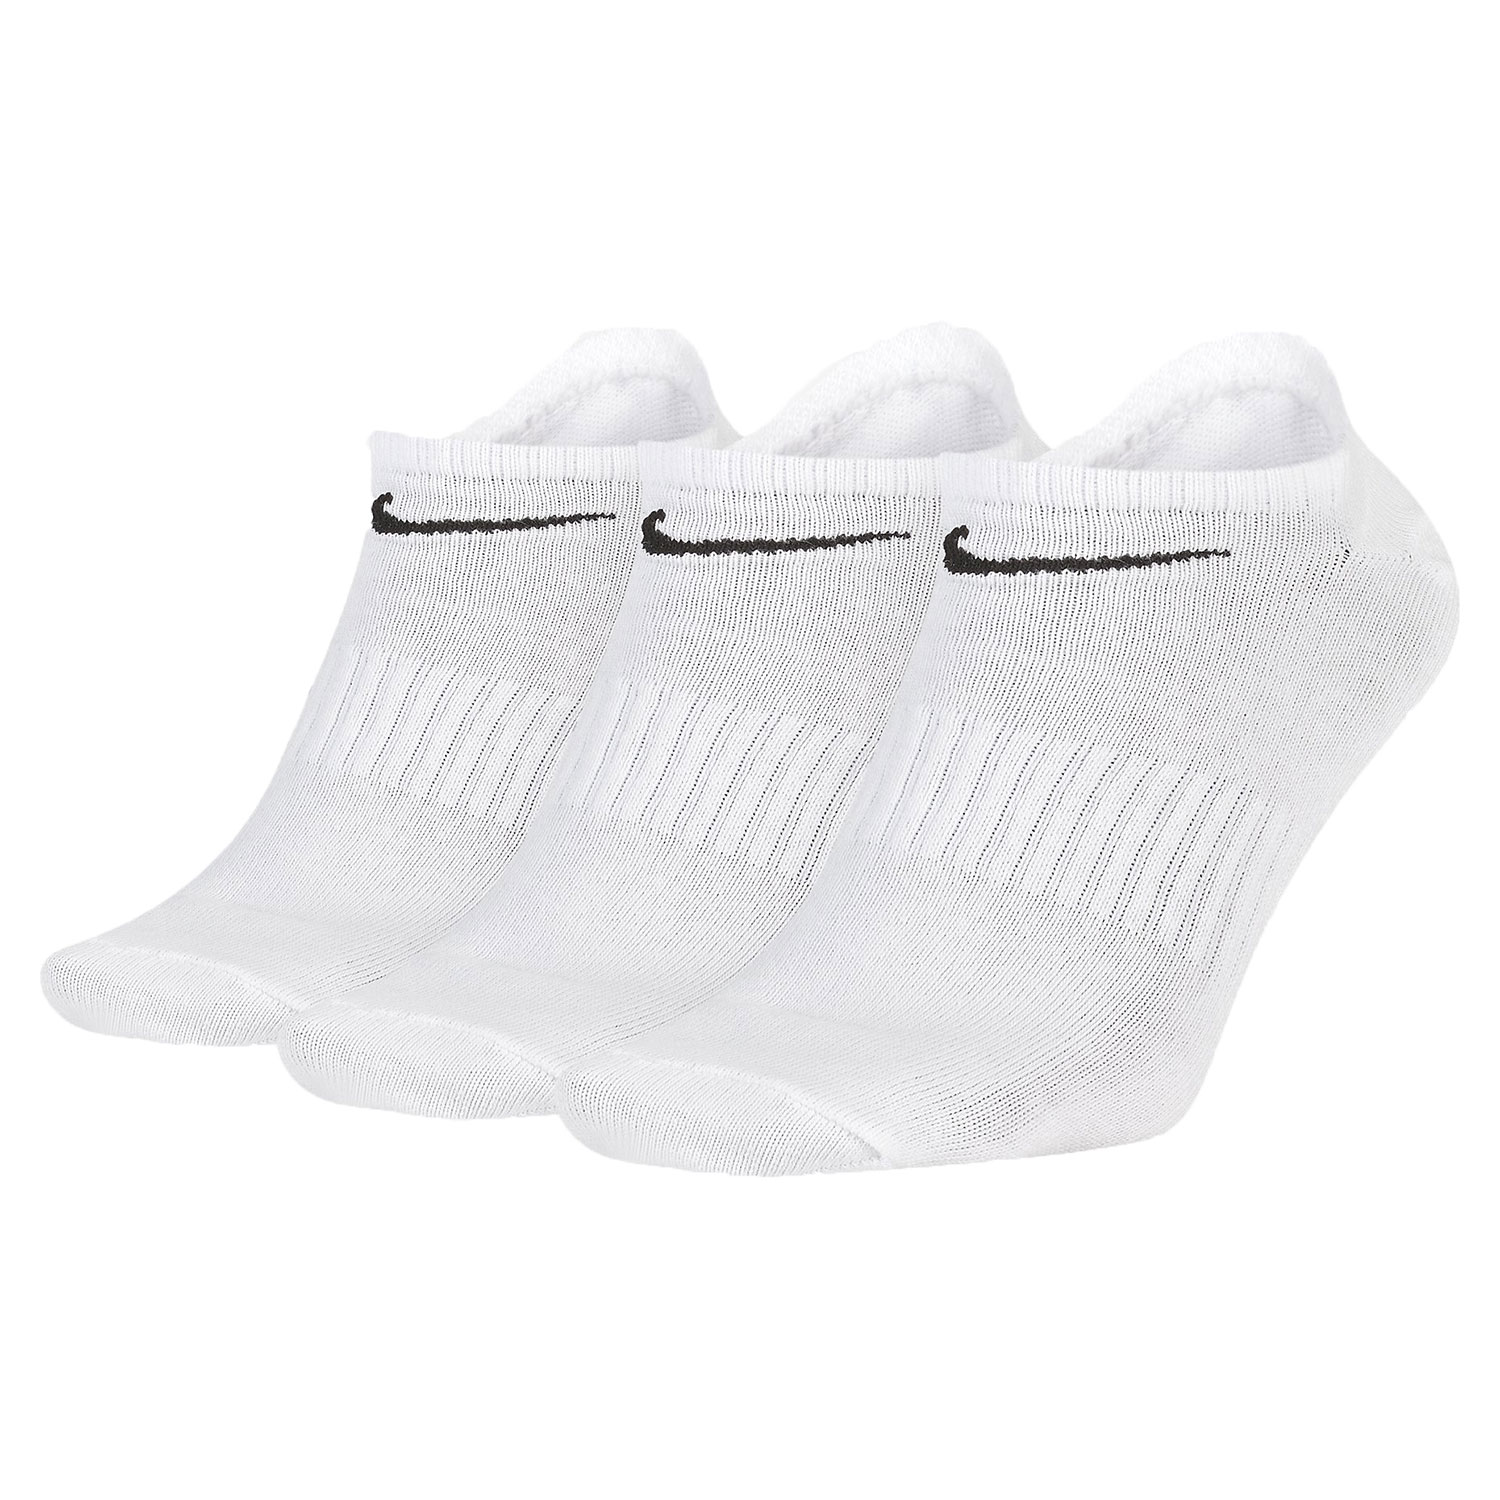 Nike Everyday Lightweight x 3 Socks - White